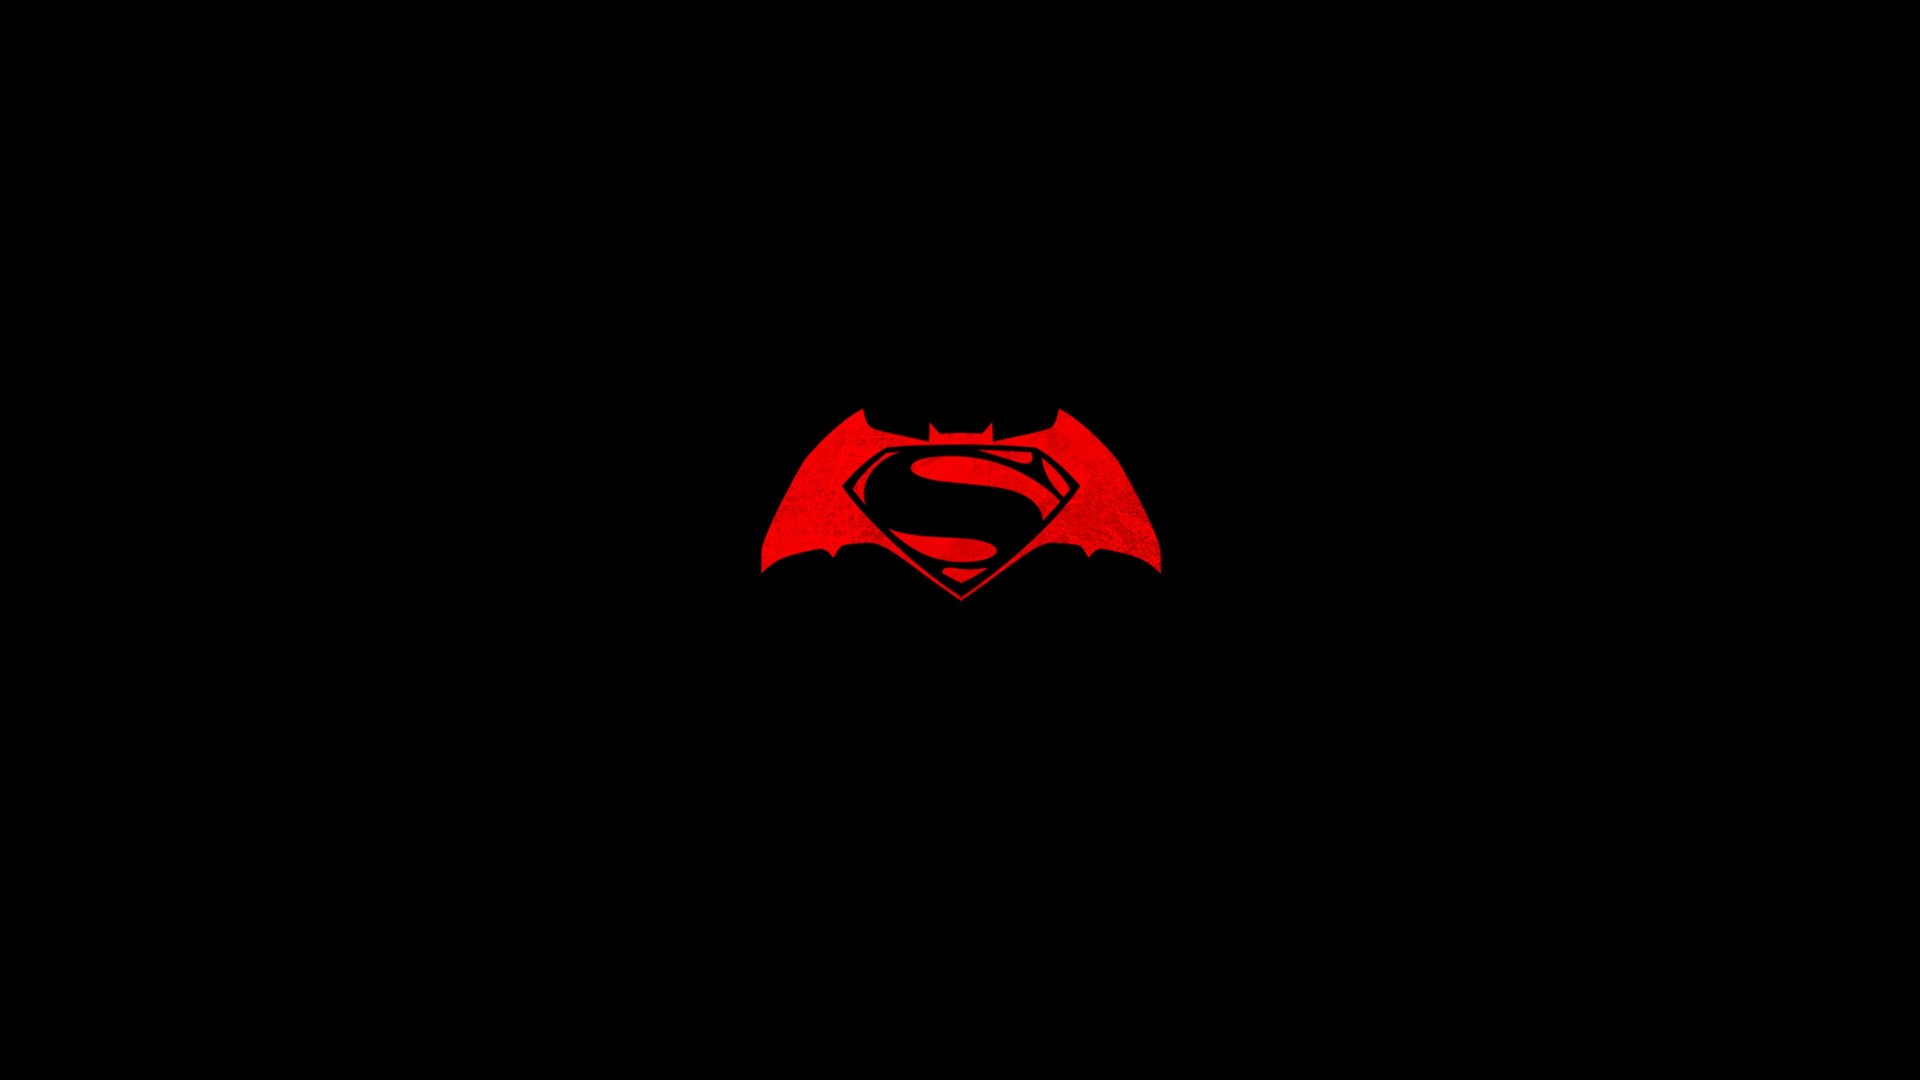 Batman v Superman logo Wallpaper for Desktop 1920x1080